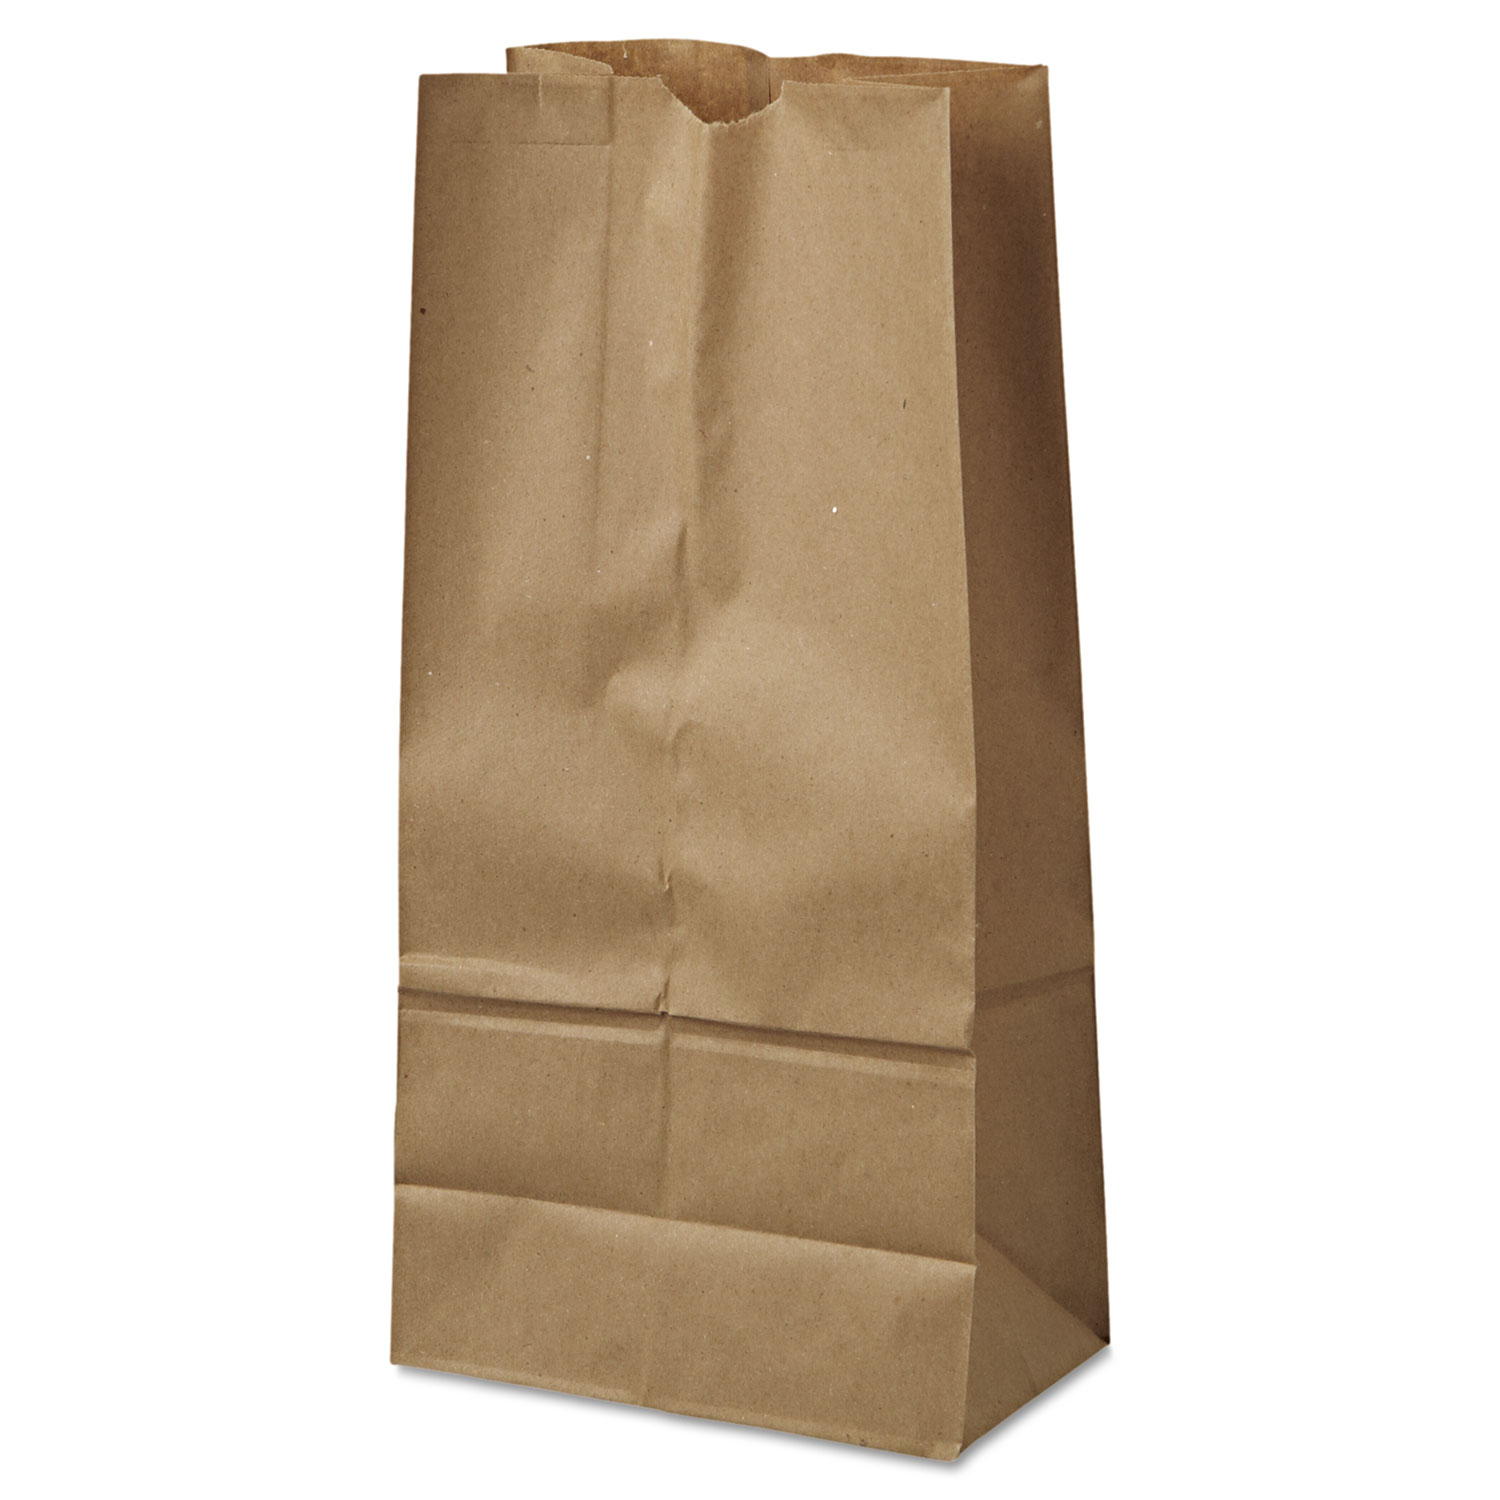  General 18416 Grocery Paper Bags, 40 lbs Capacity, #16, 7.75w x 4.81d x 16h, Kraft, 500 Bags (BAGGK16500) 